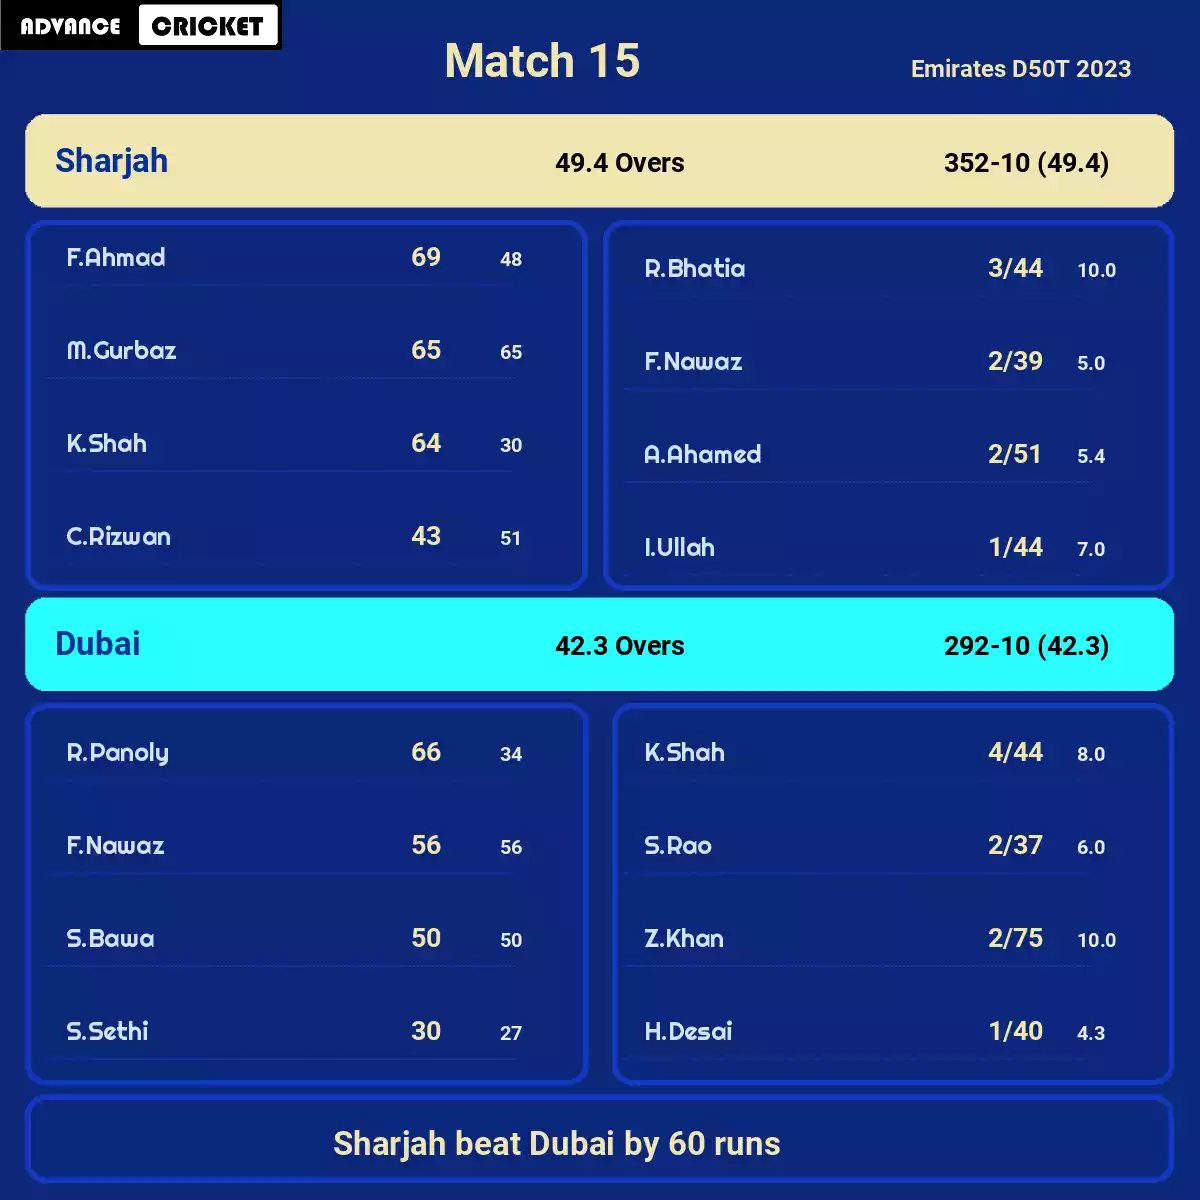 SHA vs DUB Match 15 Emirates D50T 2023